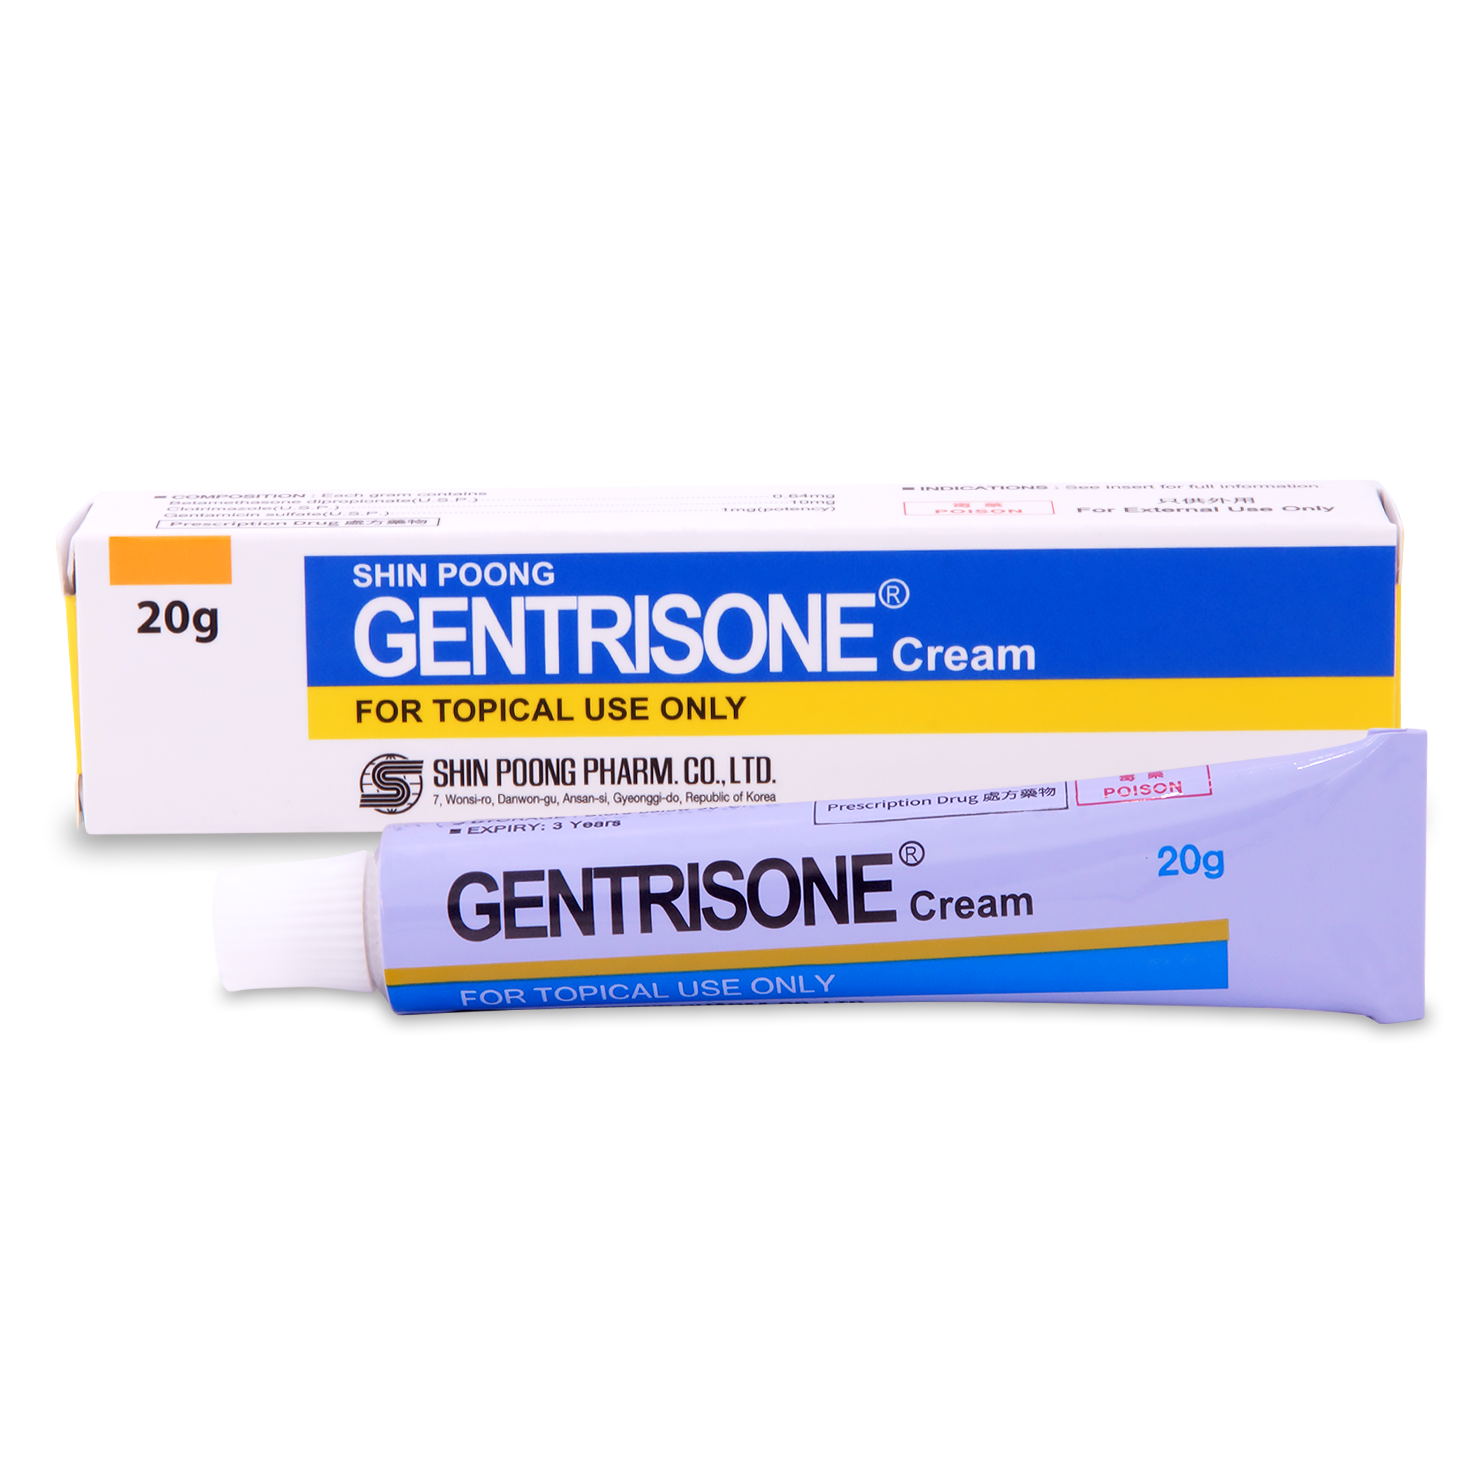 Shin Poong Gentrisone Cream 20g (P1S1S3 & A)